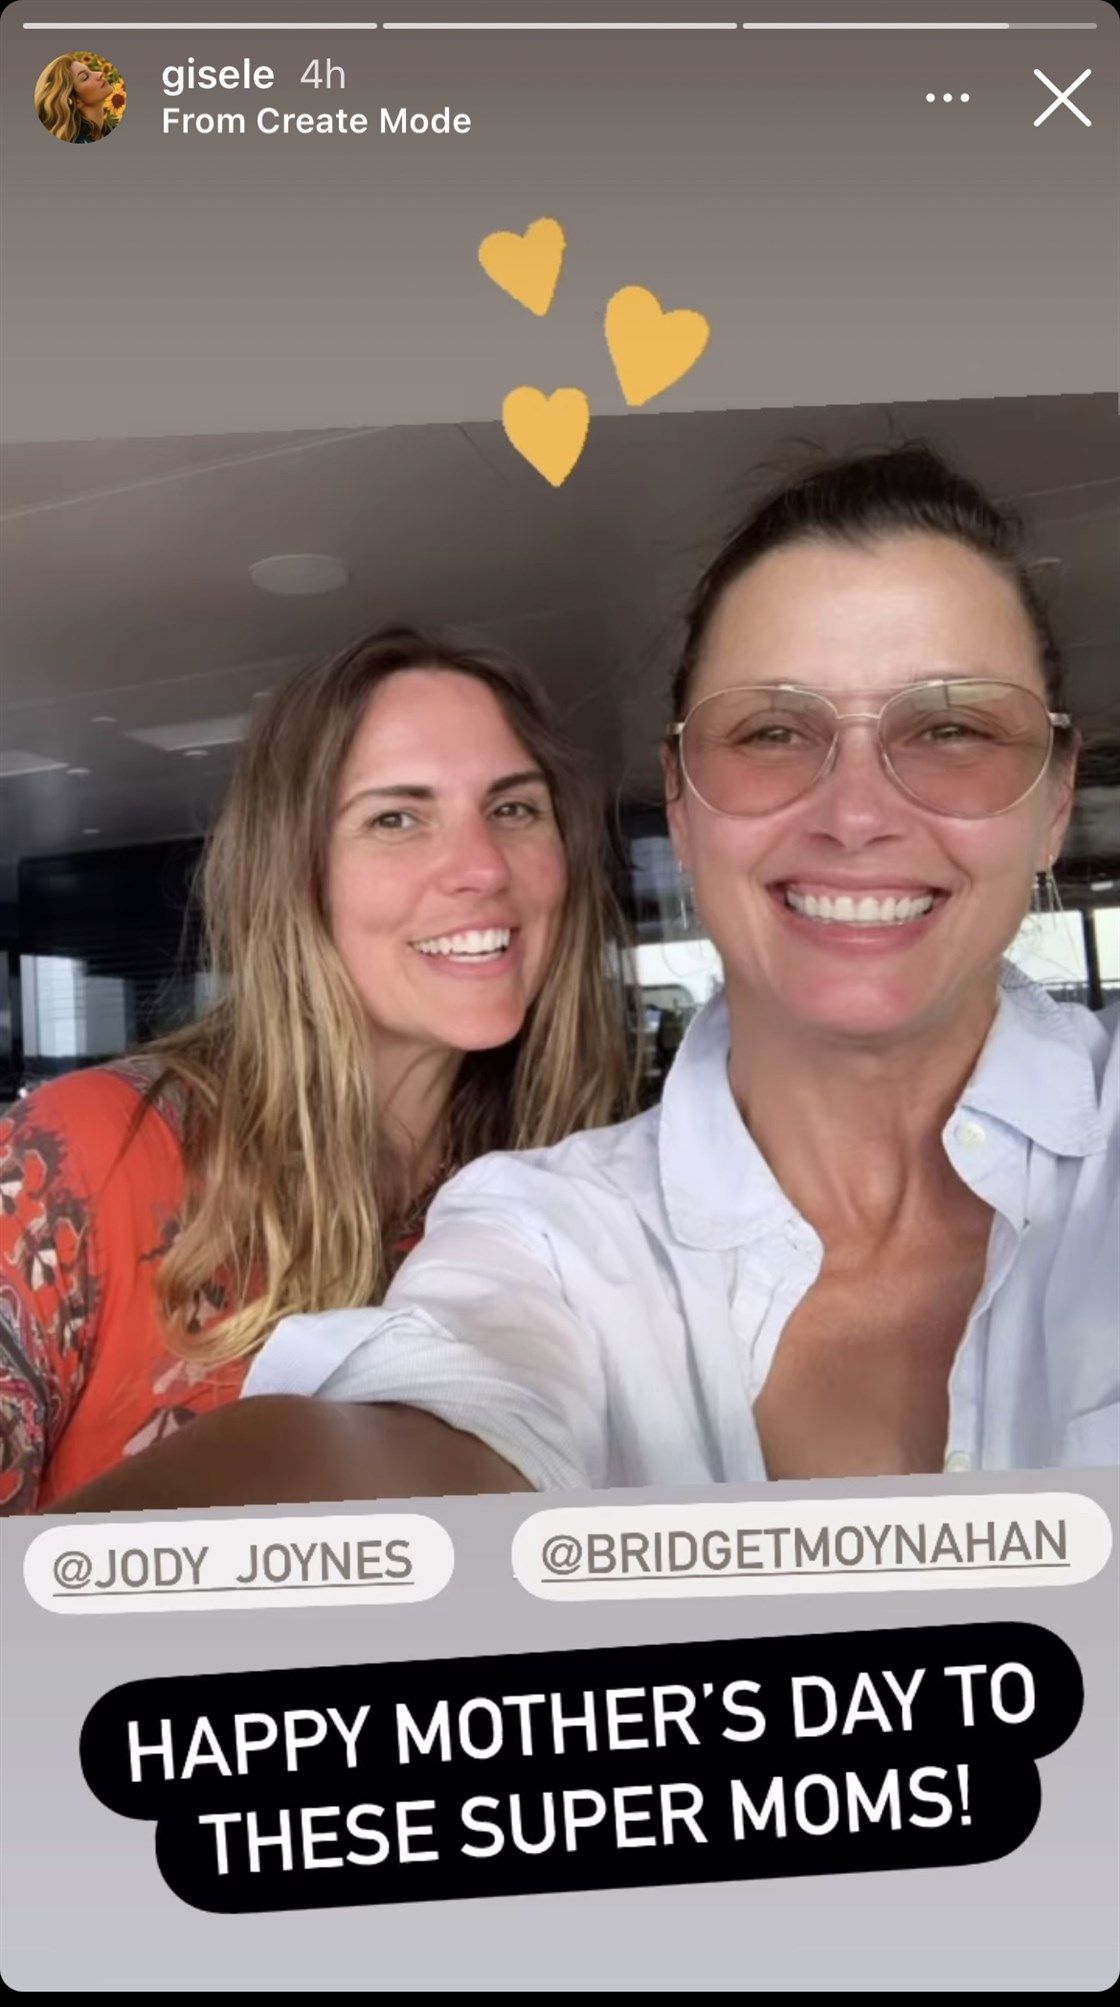 Tom Brady shares rare family photo with ex Bridget Moynahan and wife Gisele  Bundchen